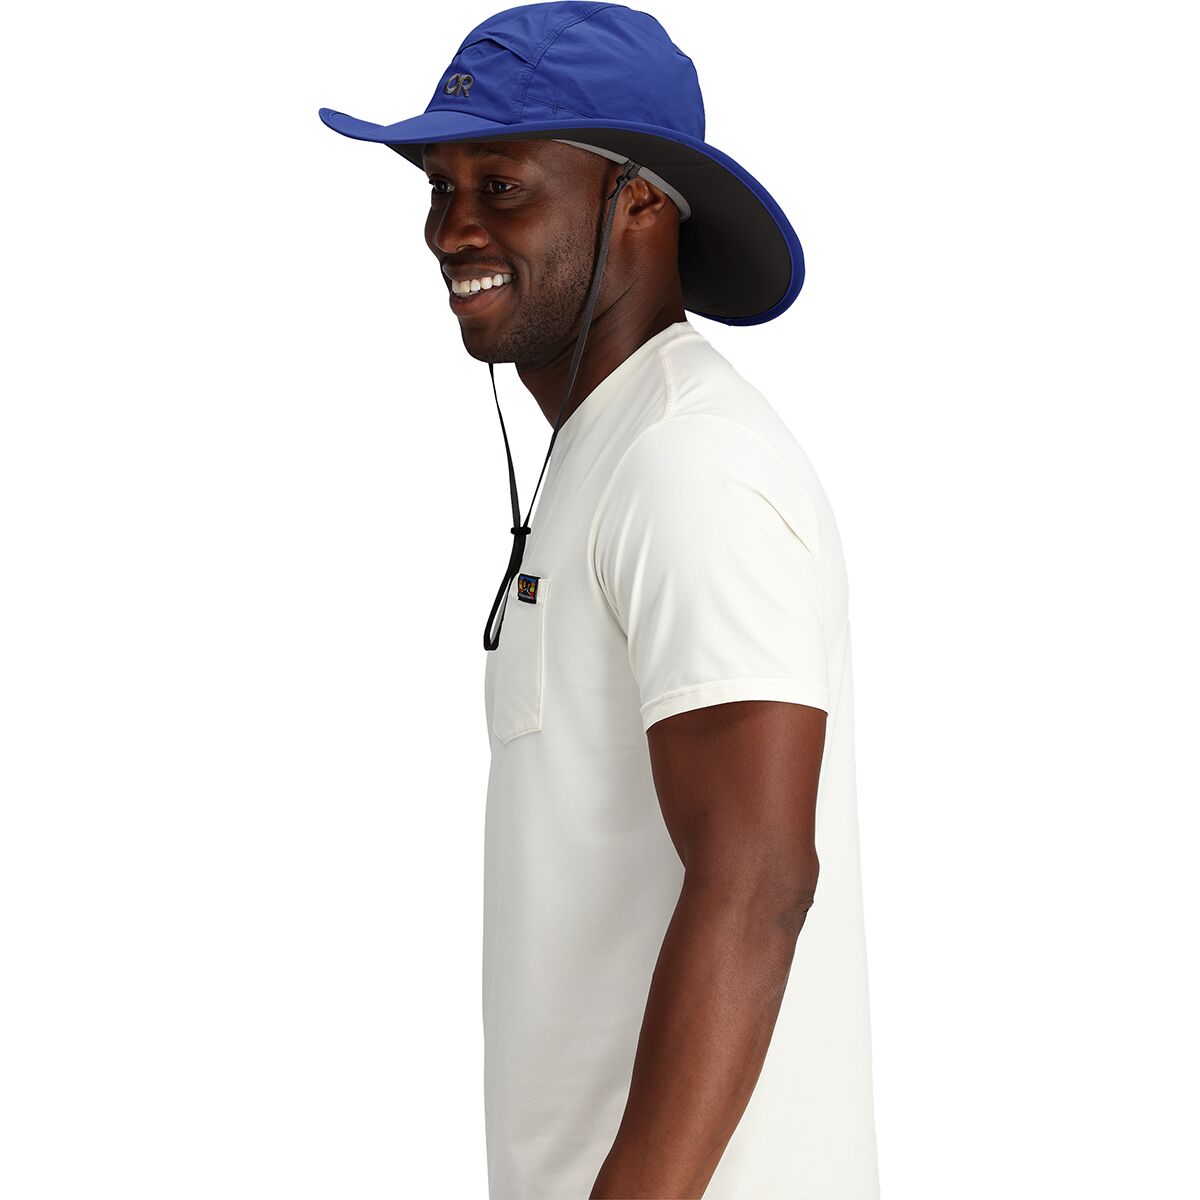 Outdoor Research Sunbriolet Sun Hat (Ultramarine, Medium)